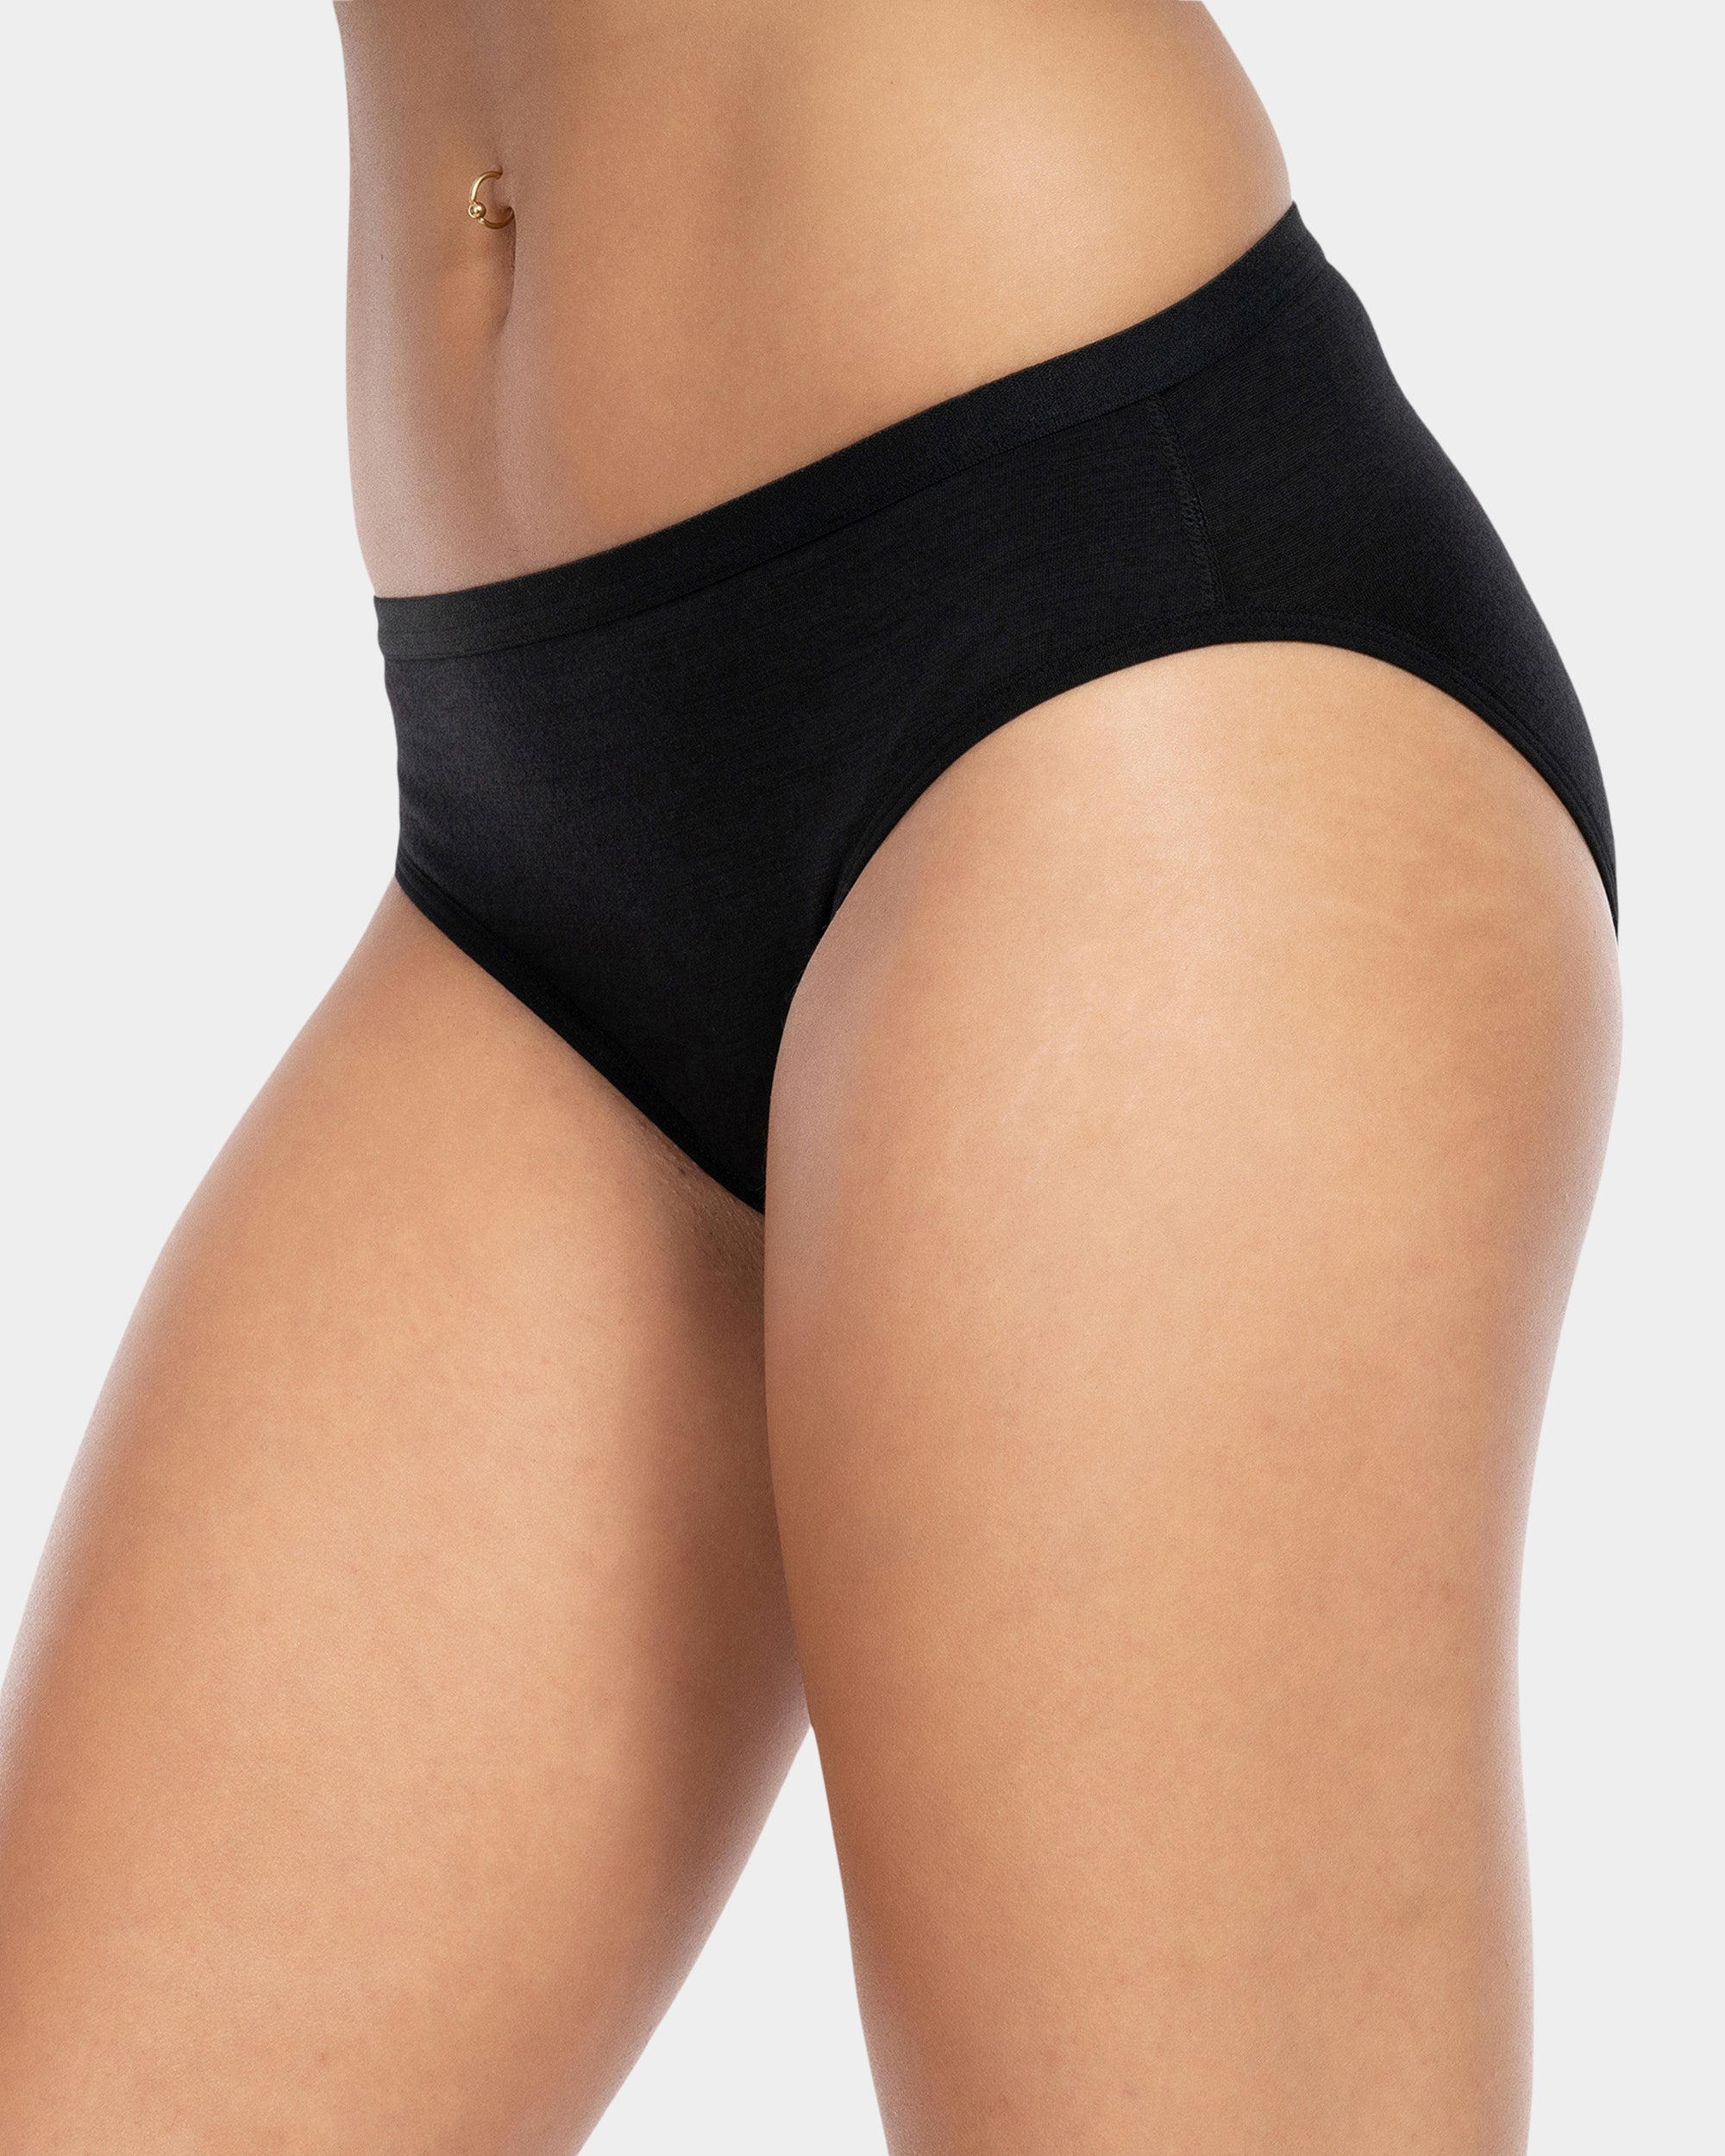 Bikini briefs in soft Q-NOVA yarn, Eco-Friendly, black, Women's Underwear